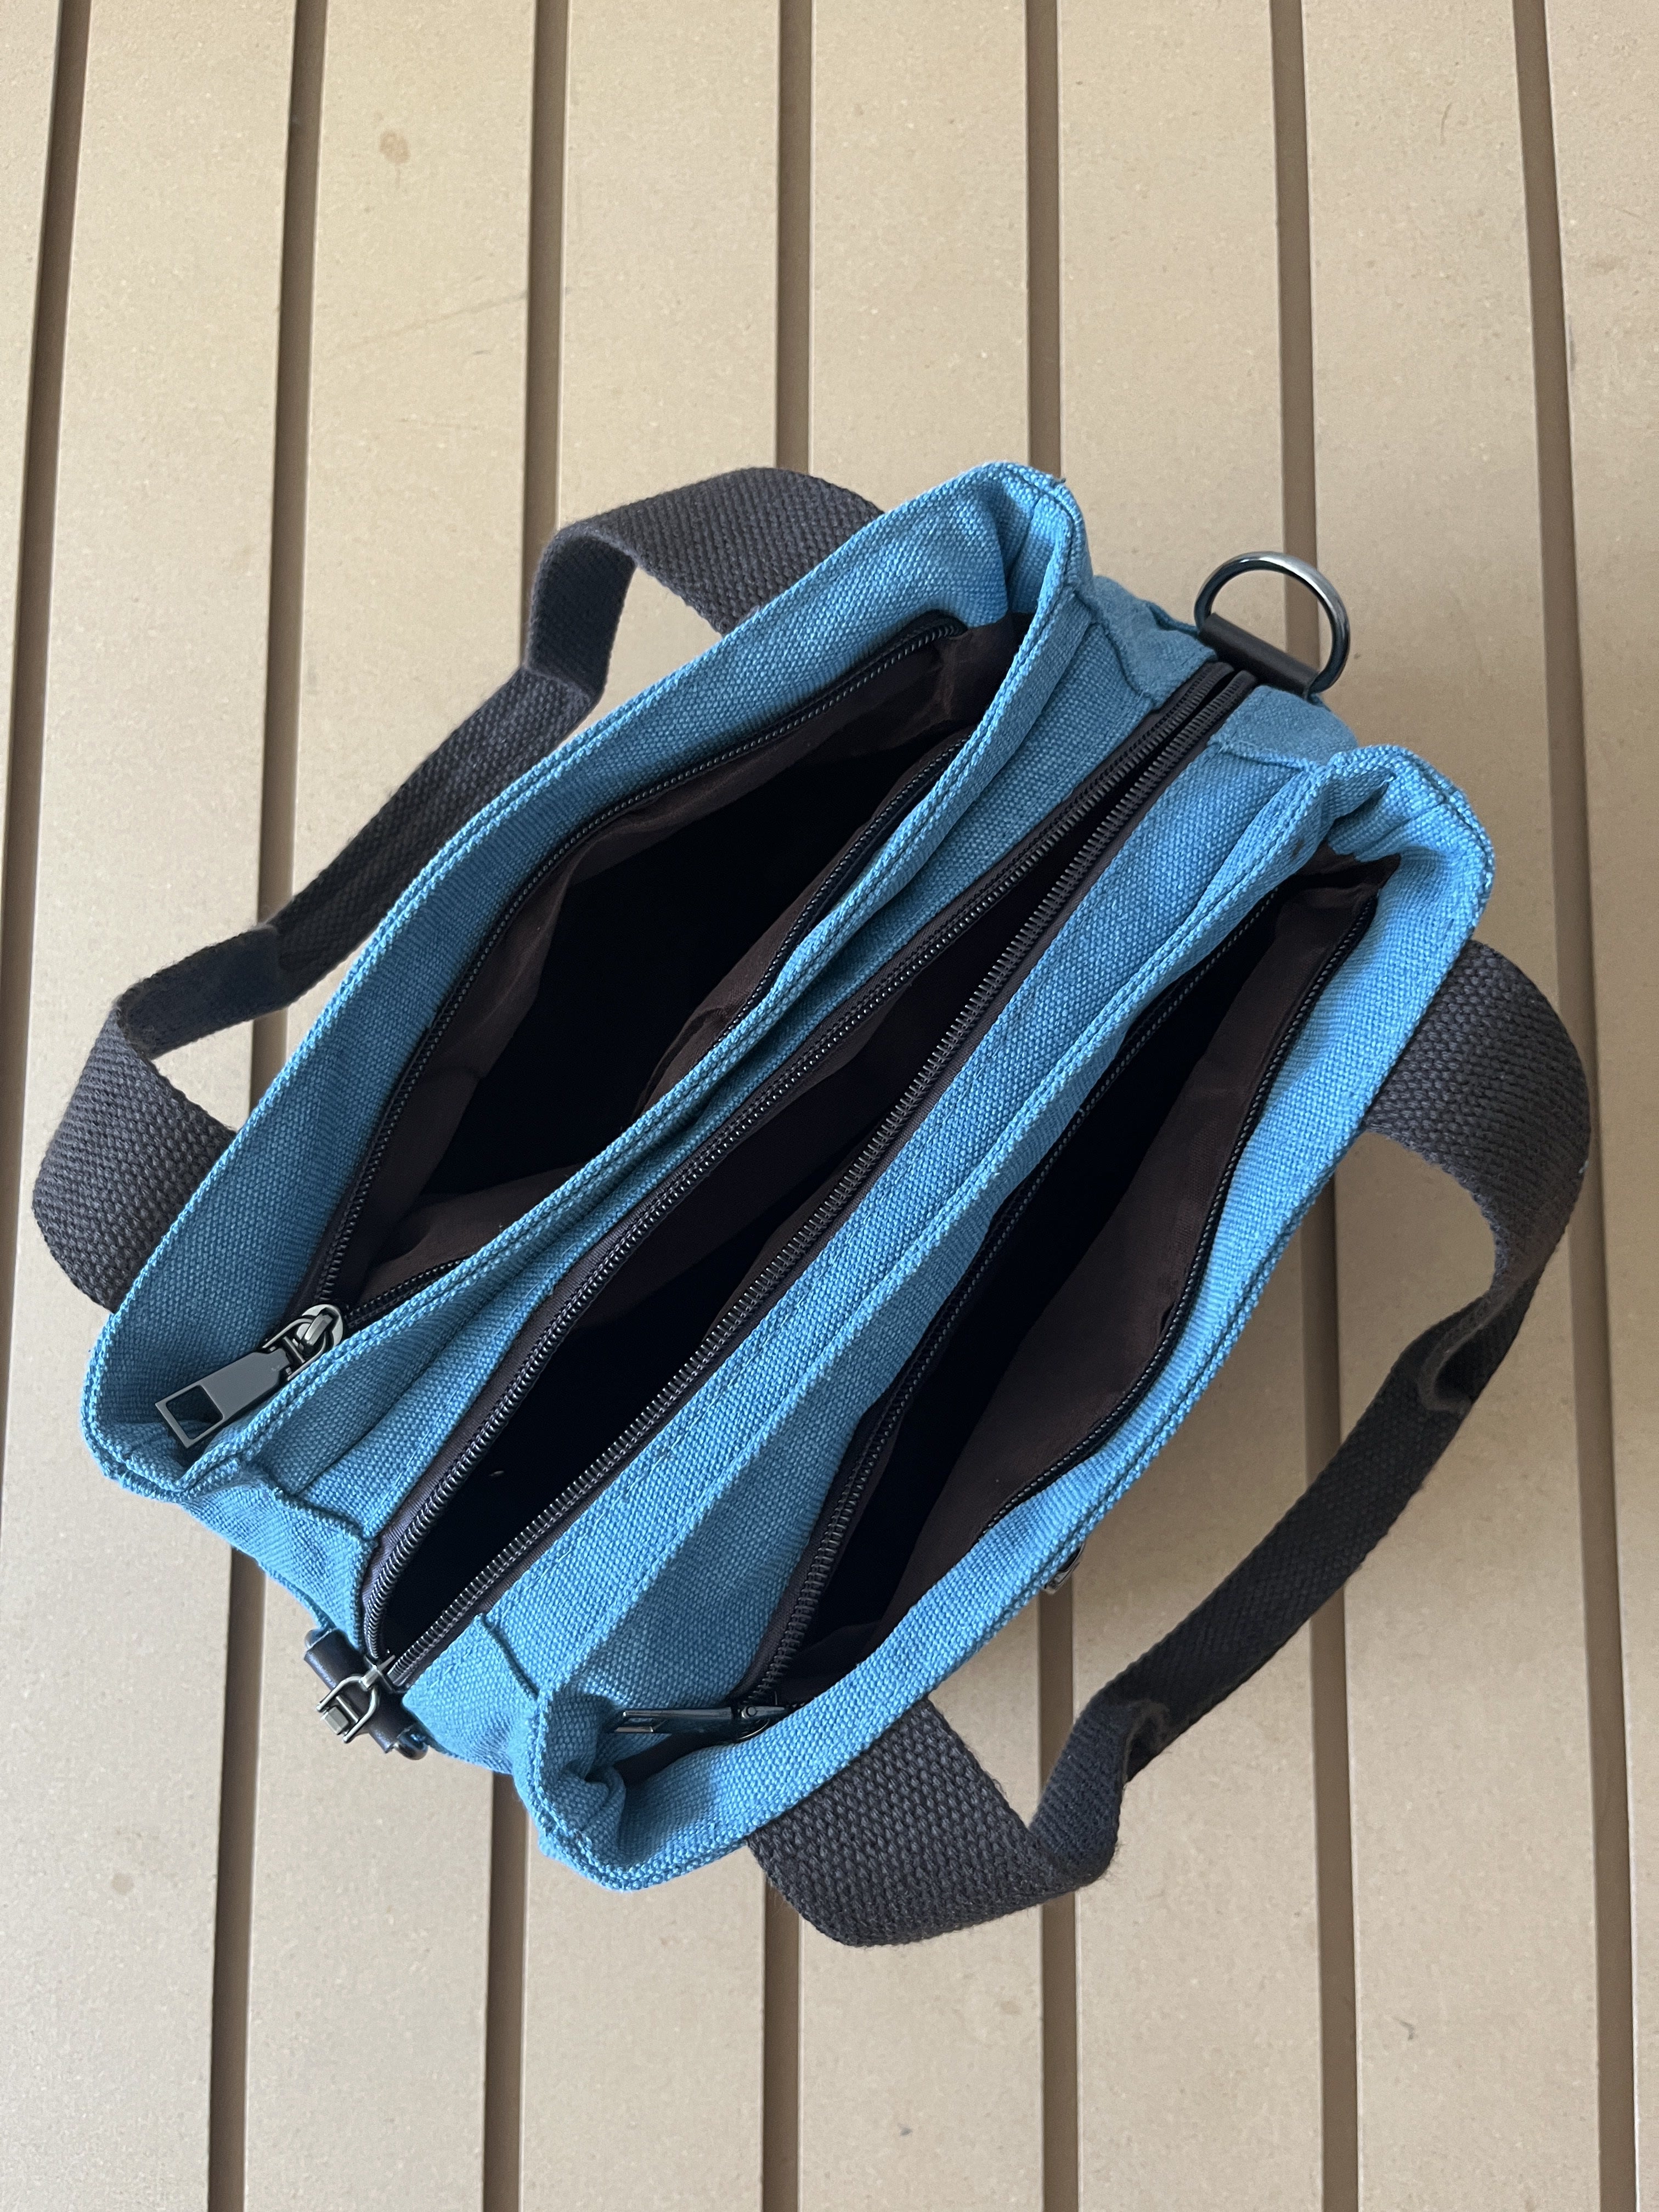 Fossil Crossbody Handbag PVC Canvas Striped Multi Color Purse Key Per | eBay